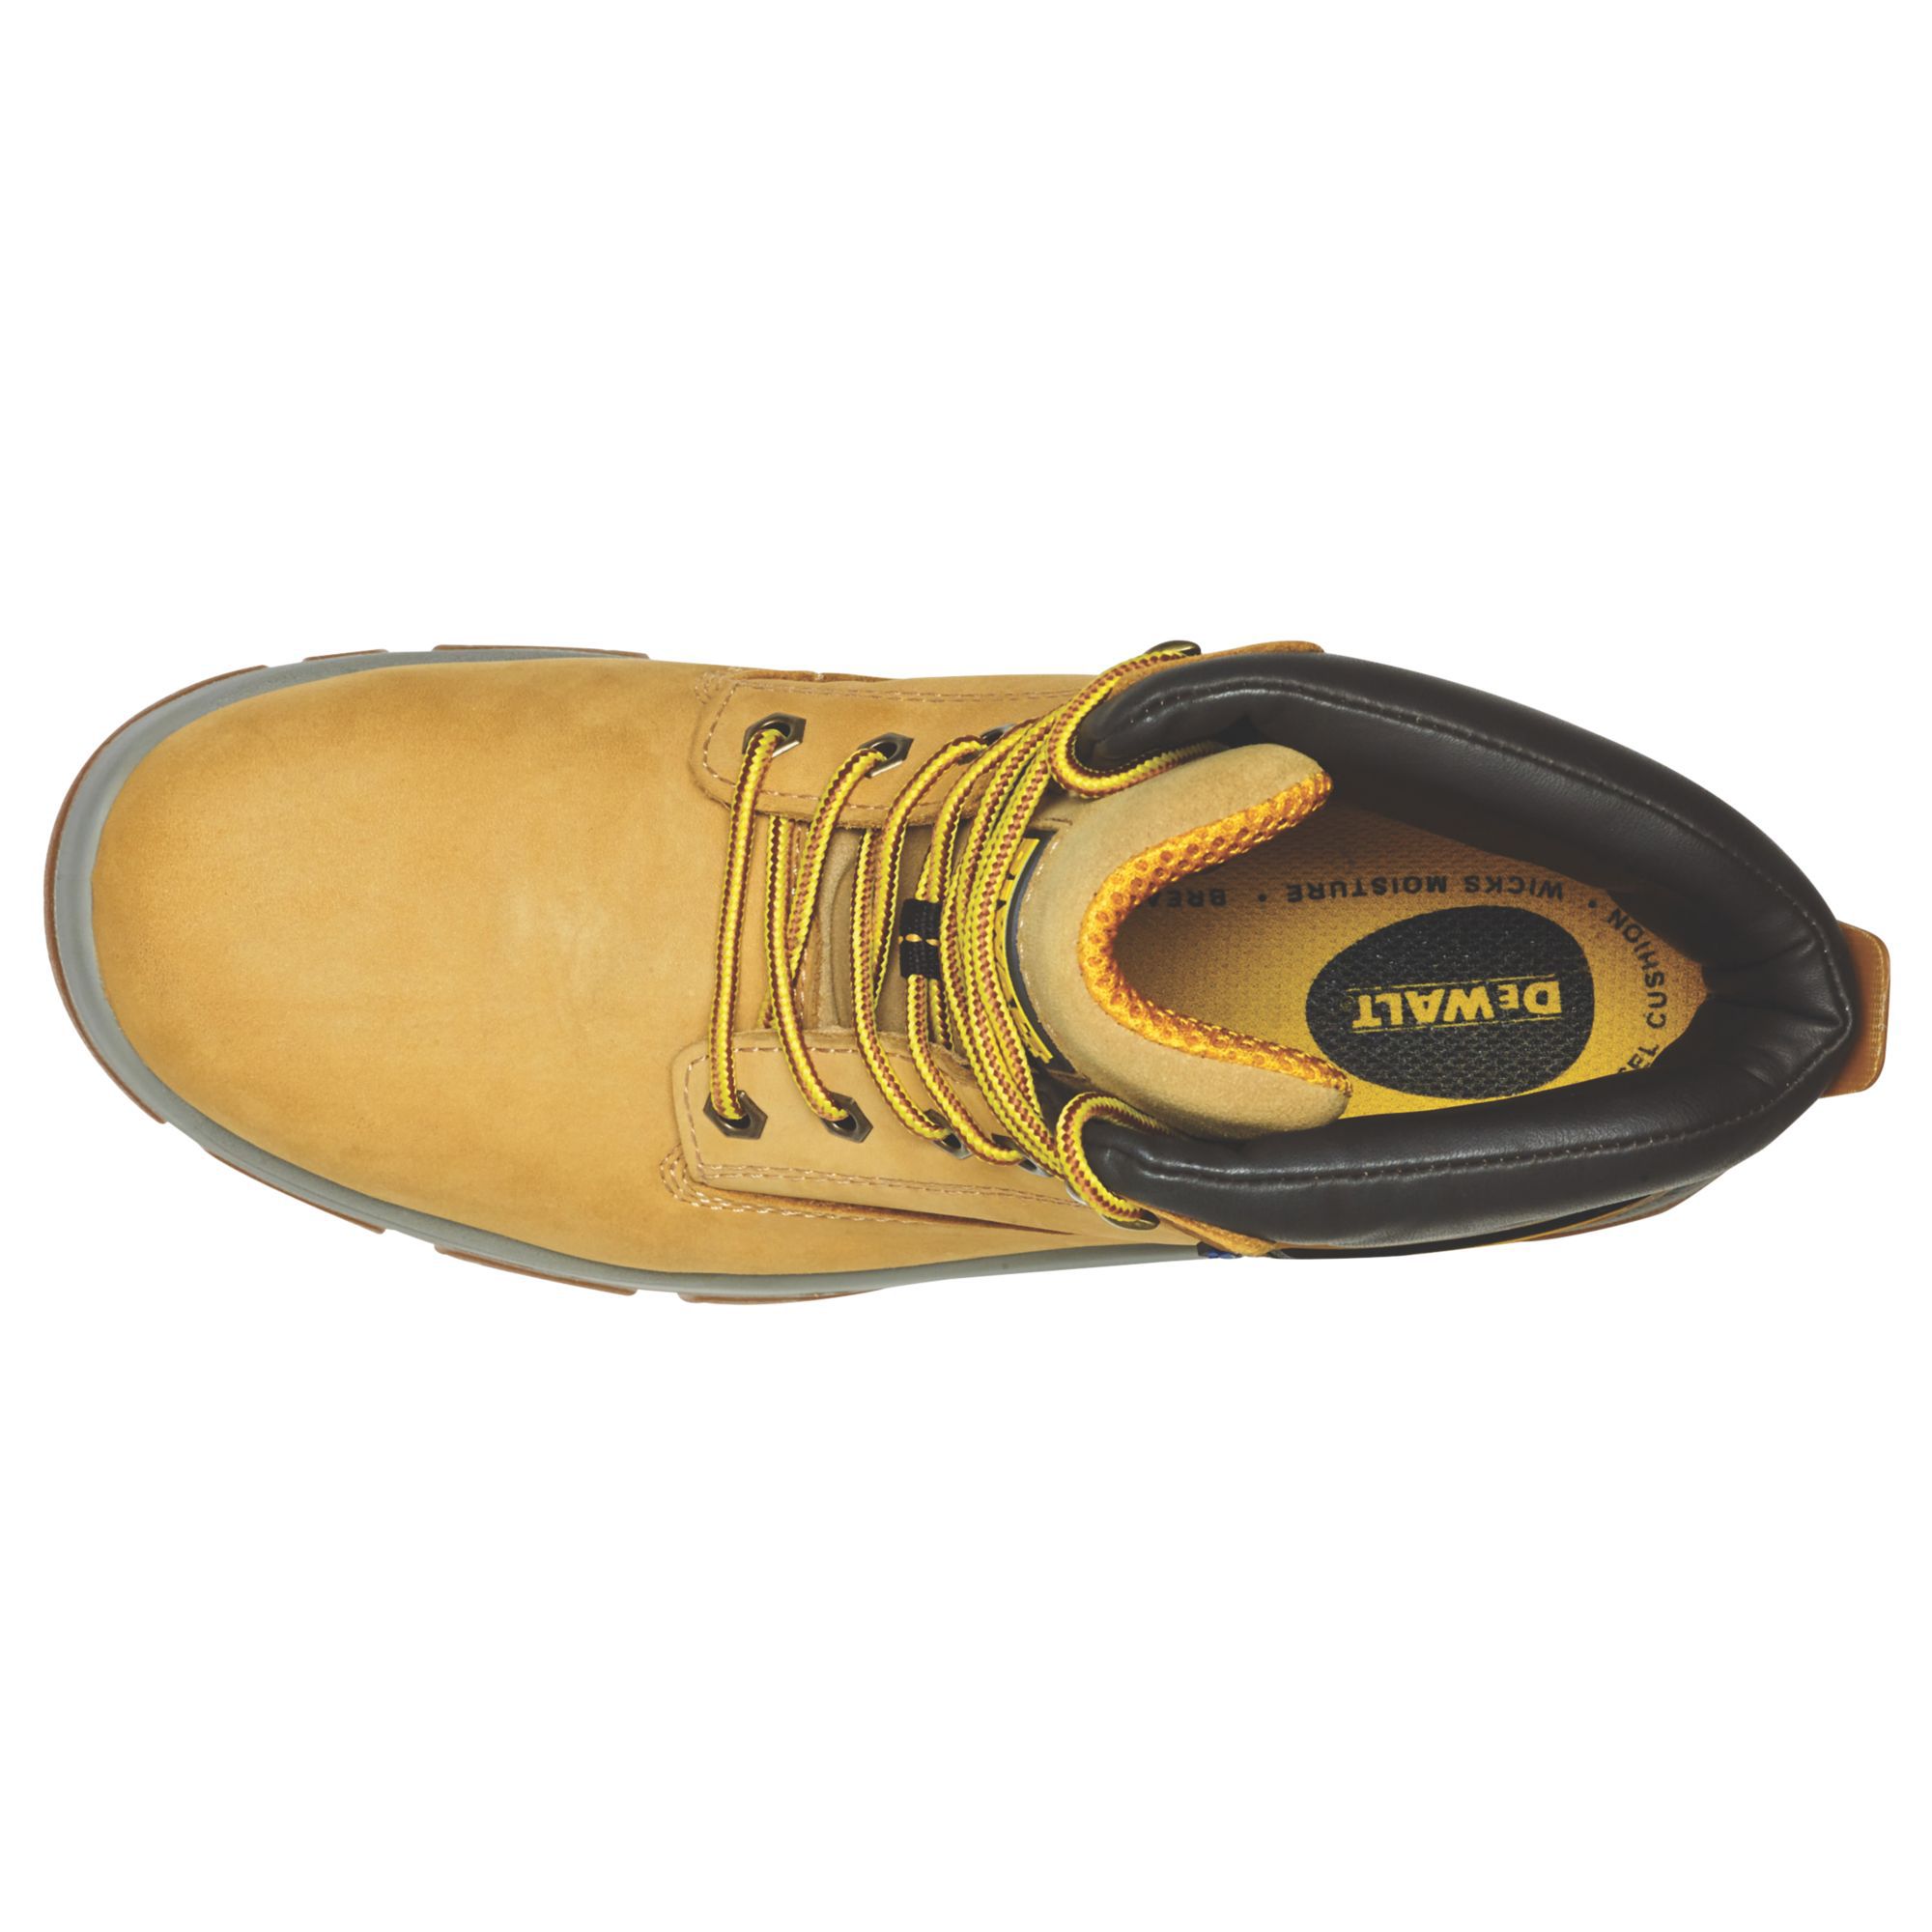 DeWalt Titanium Men's Honey Safety boots, Size 11